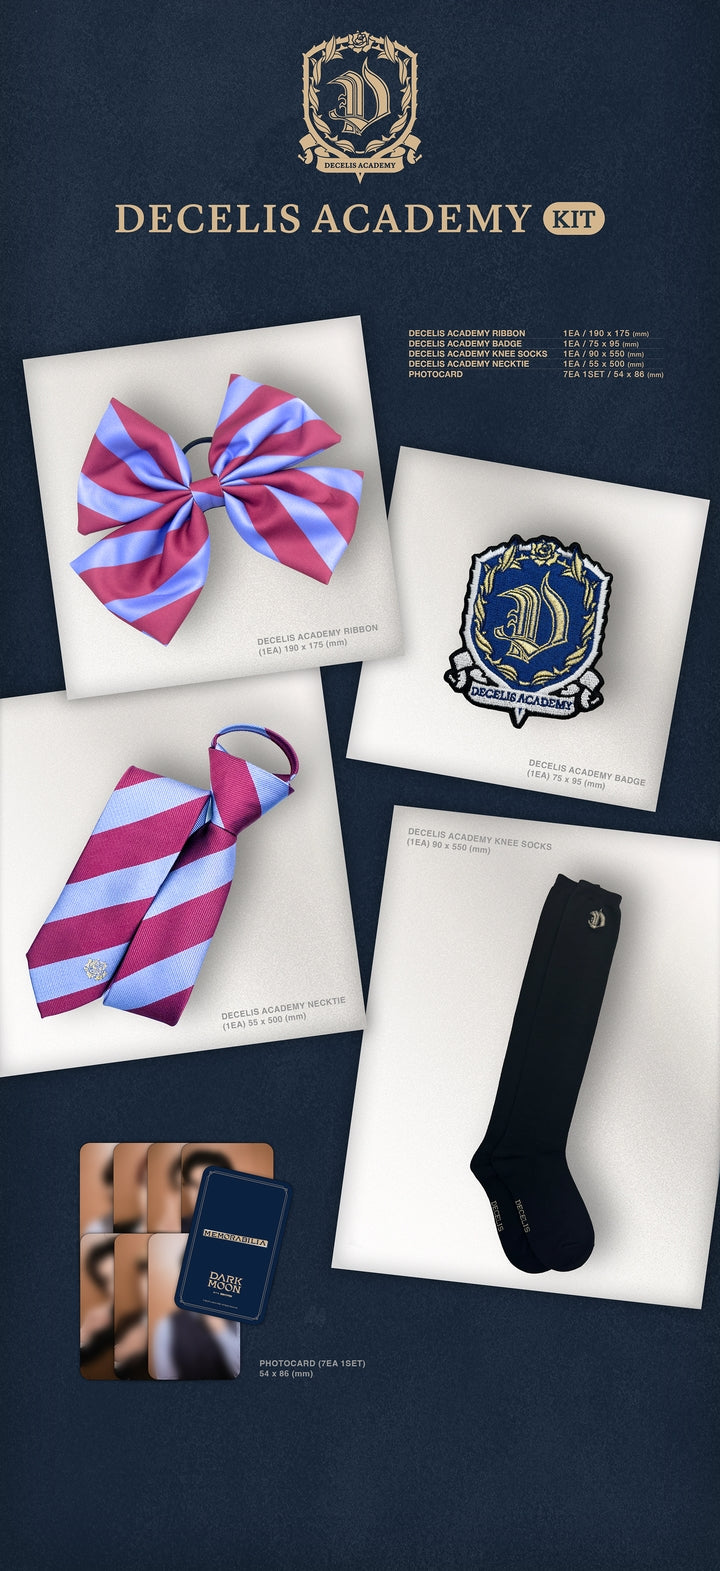 ENHYPEN DARK MOON SPECIAL ALBUM MEMORABILIA Decelis Academy Kit: Ribbon, Badge, Necktie, Knee Socks, Photocard Set